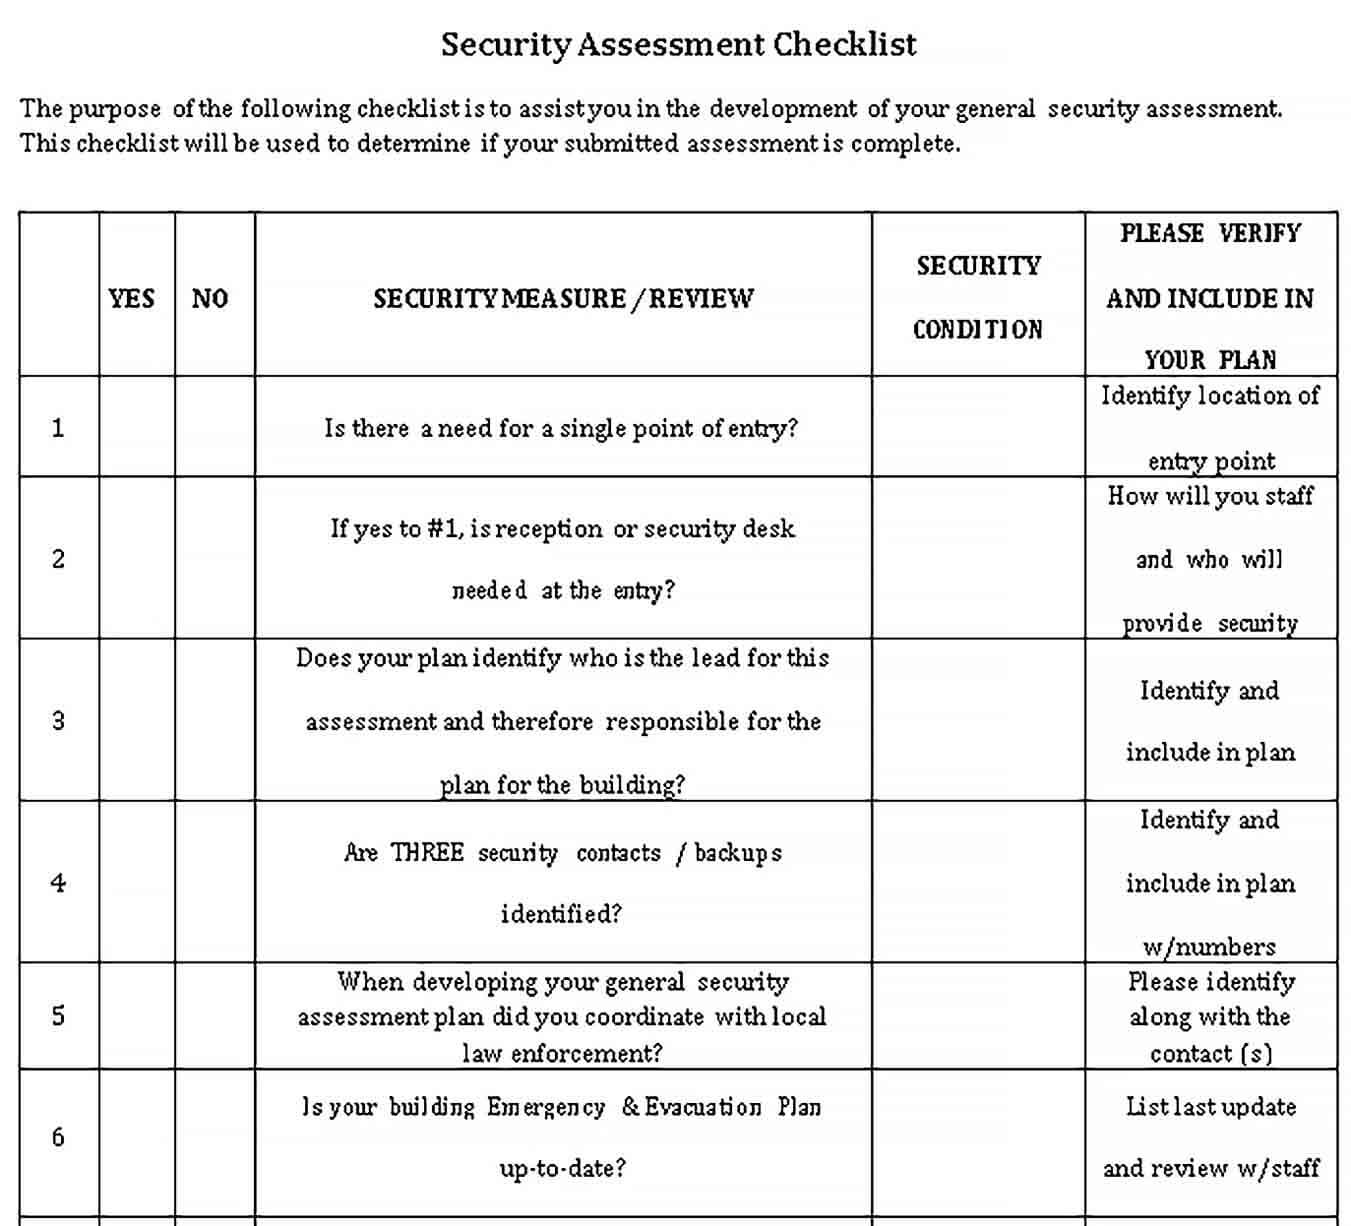 Sample Security Assessment Checklist